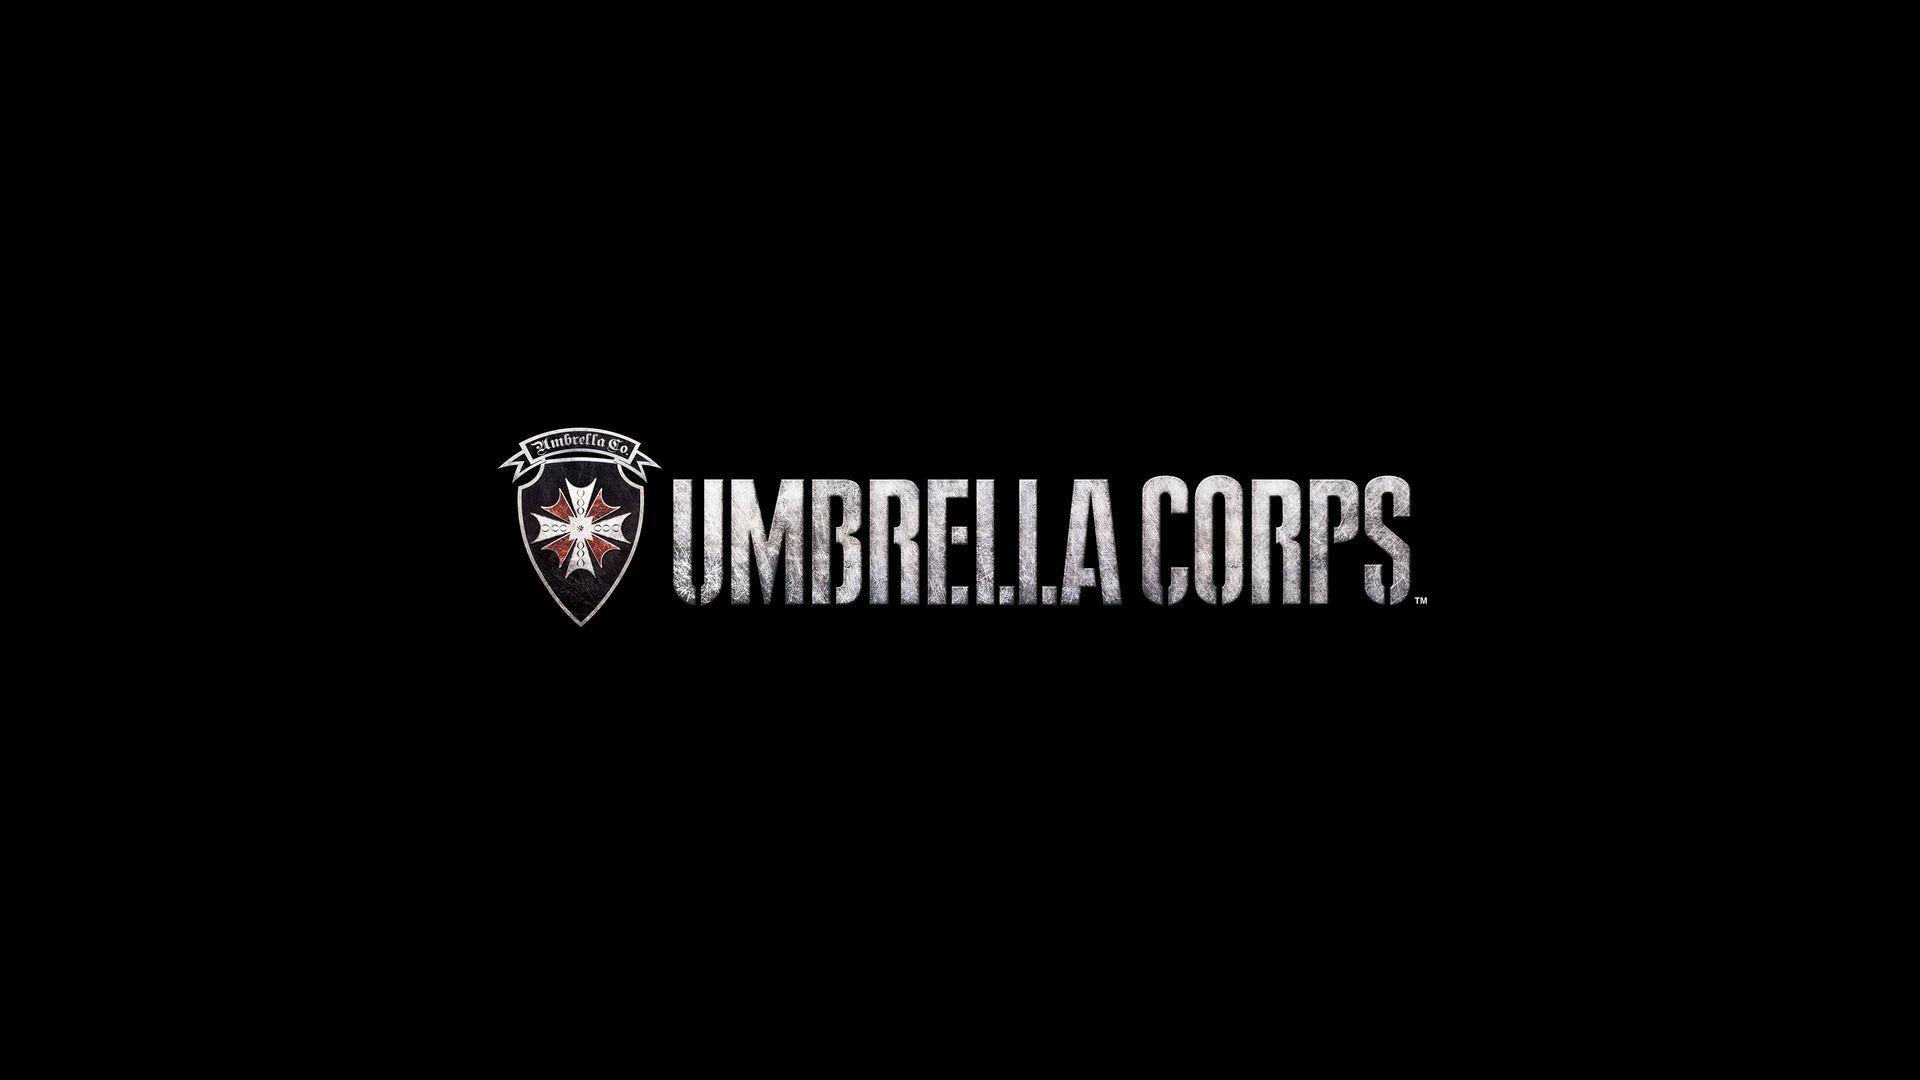 Umbrella Corp Logo - 1920x1080 Umbrella Corps Logo Laptop Full HD 1080P HD 4k Wallpapers ...